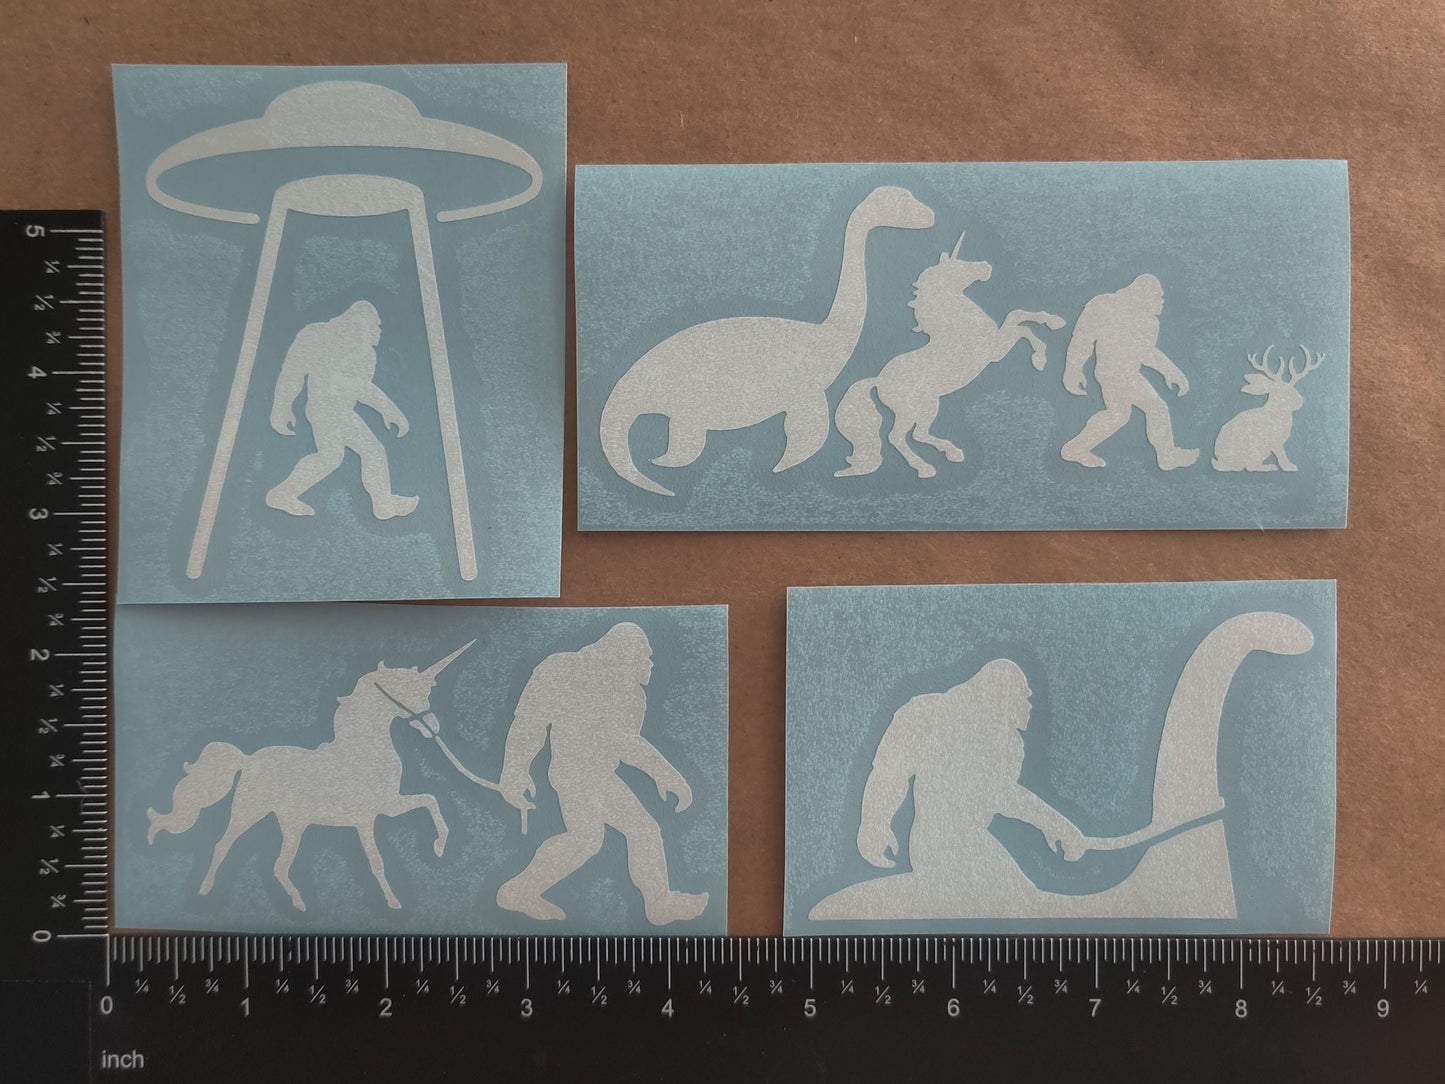 Sasquatch / Bigfoot and friends Decal 4 pack